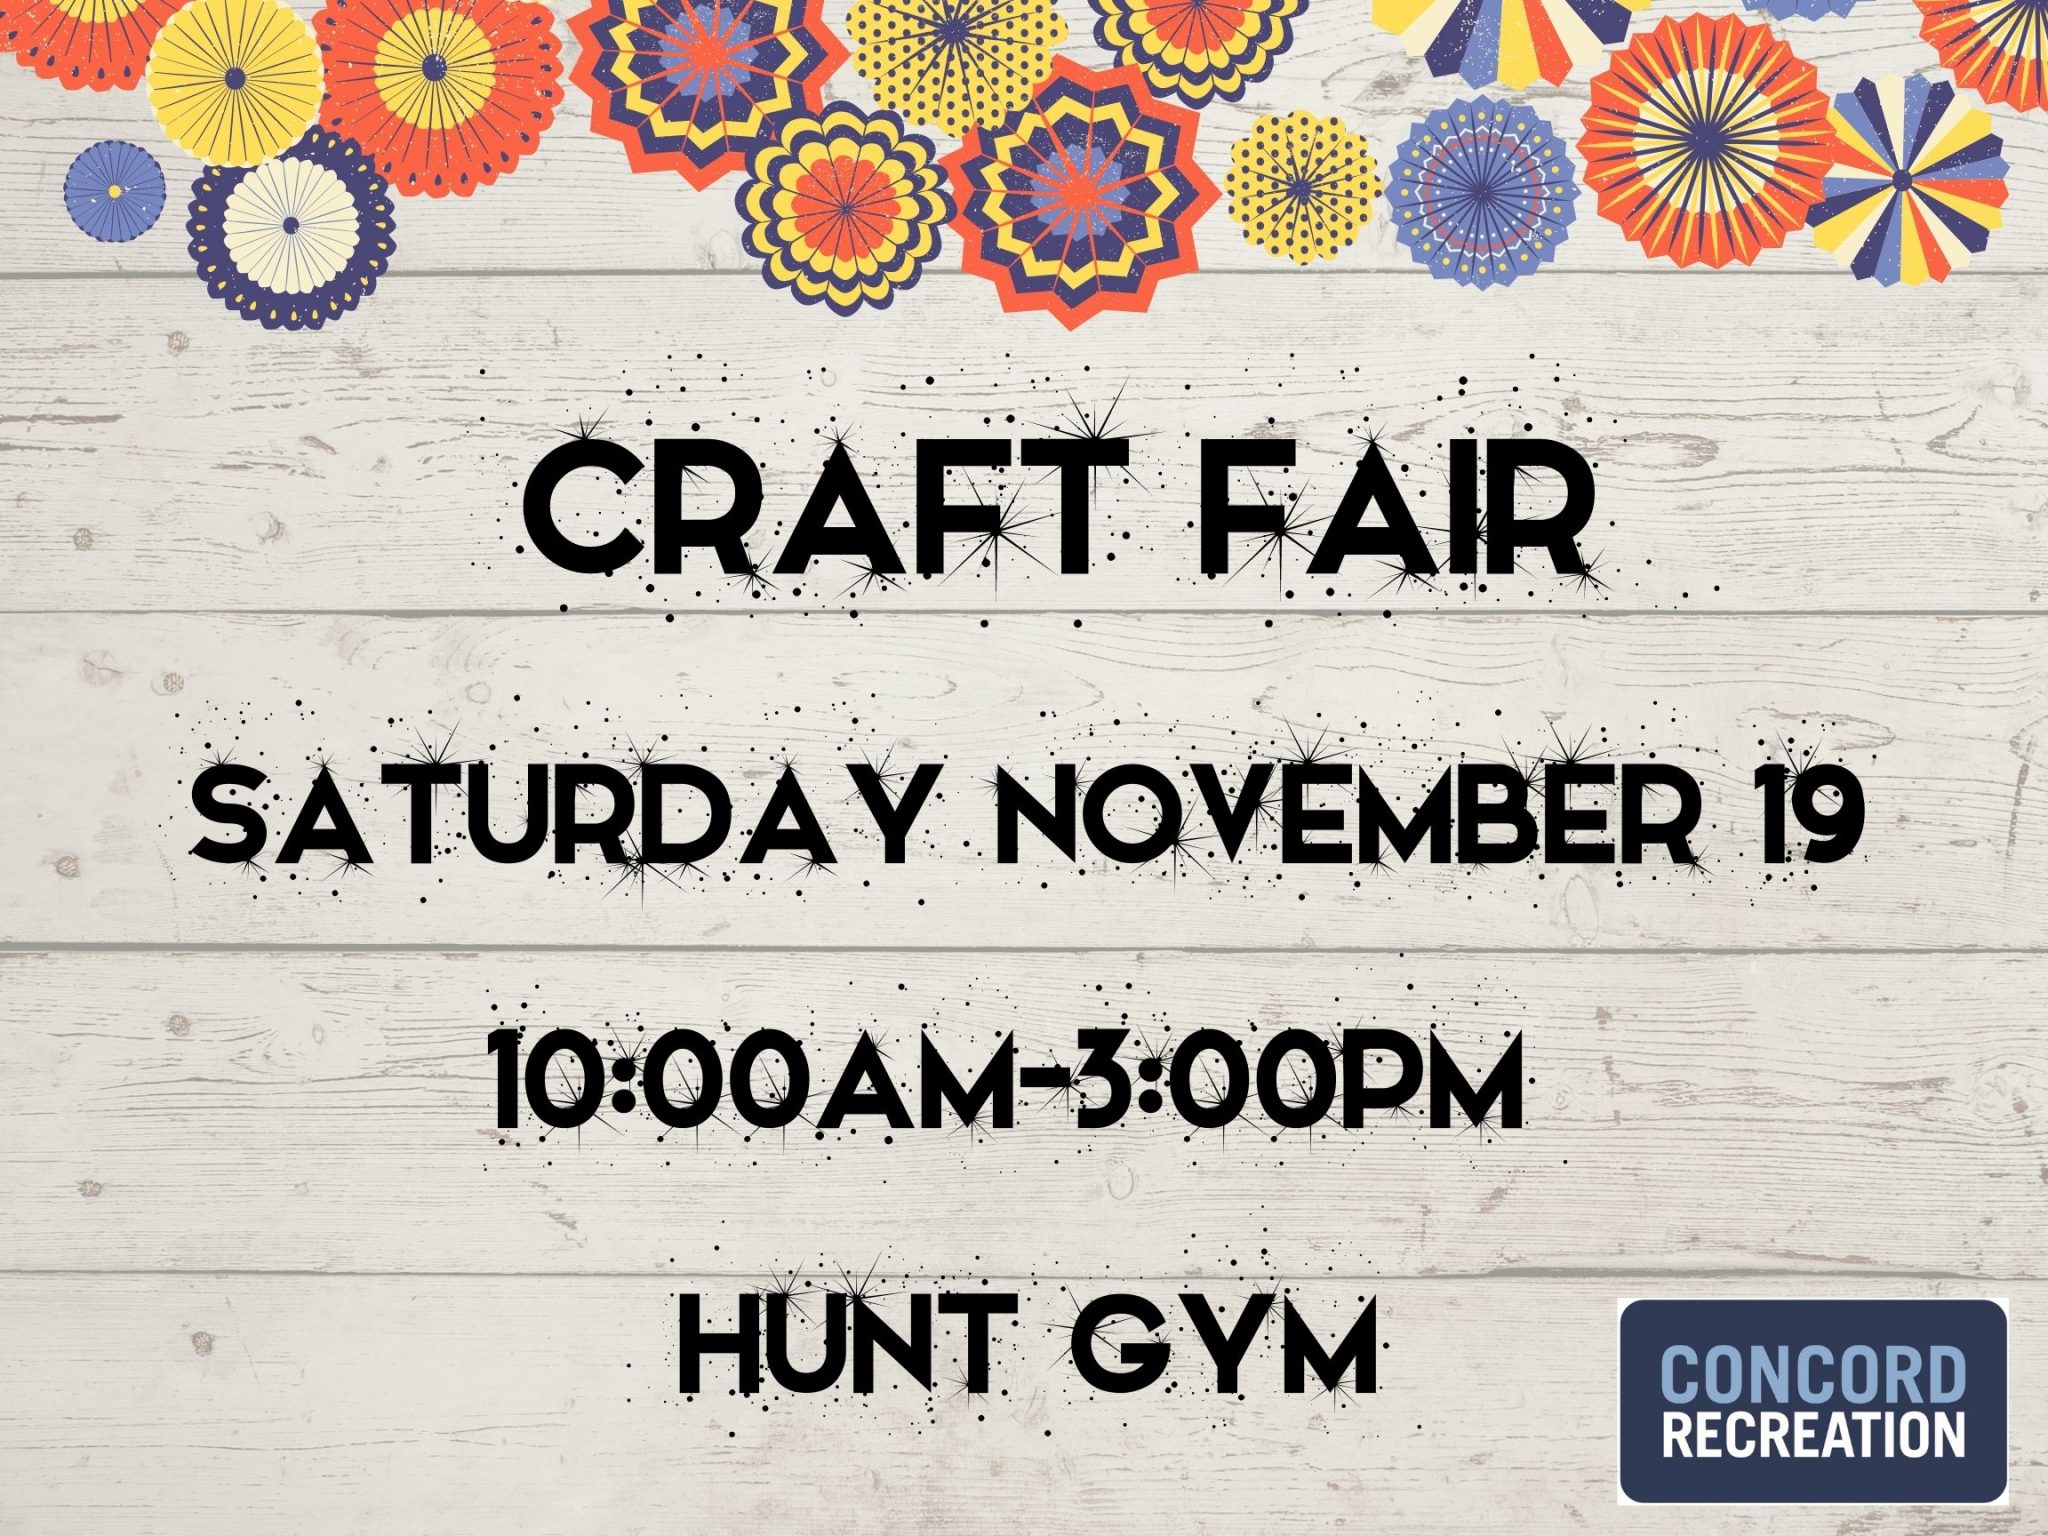 Craft Fair Concord, MA